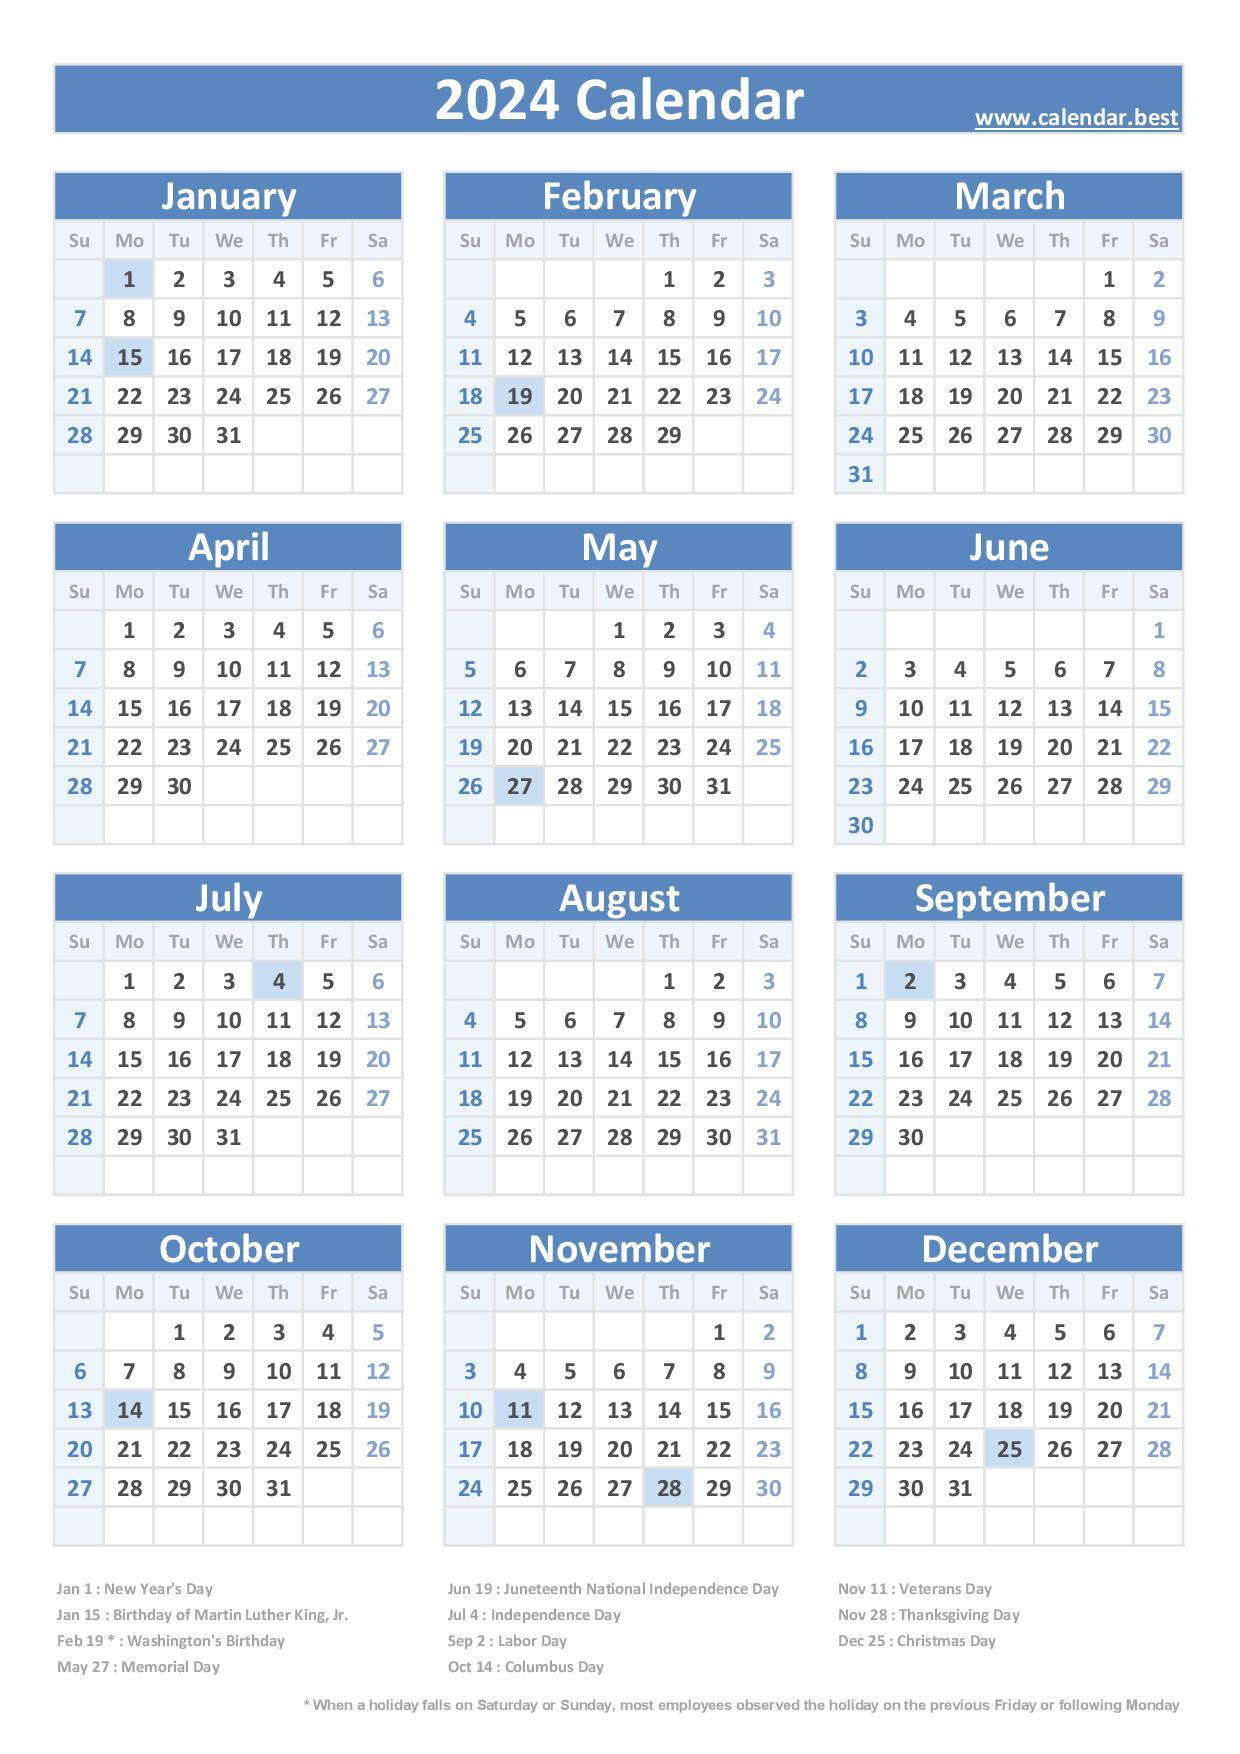 2024 Calendar With Holidays (Us Federal Holidays) | 2024 Printable Calendar One Page With Federal Holidays